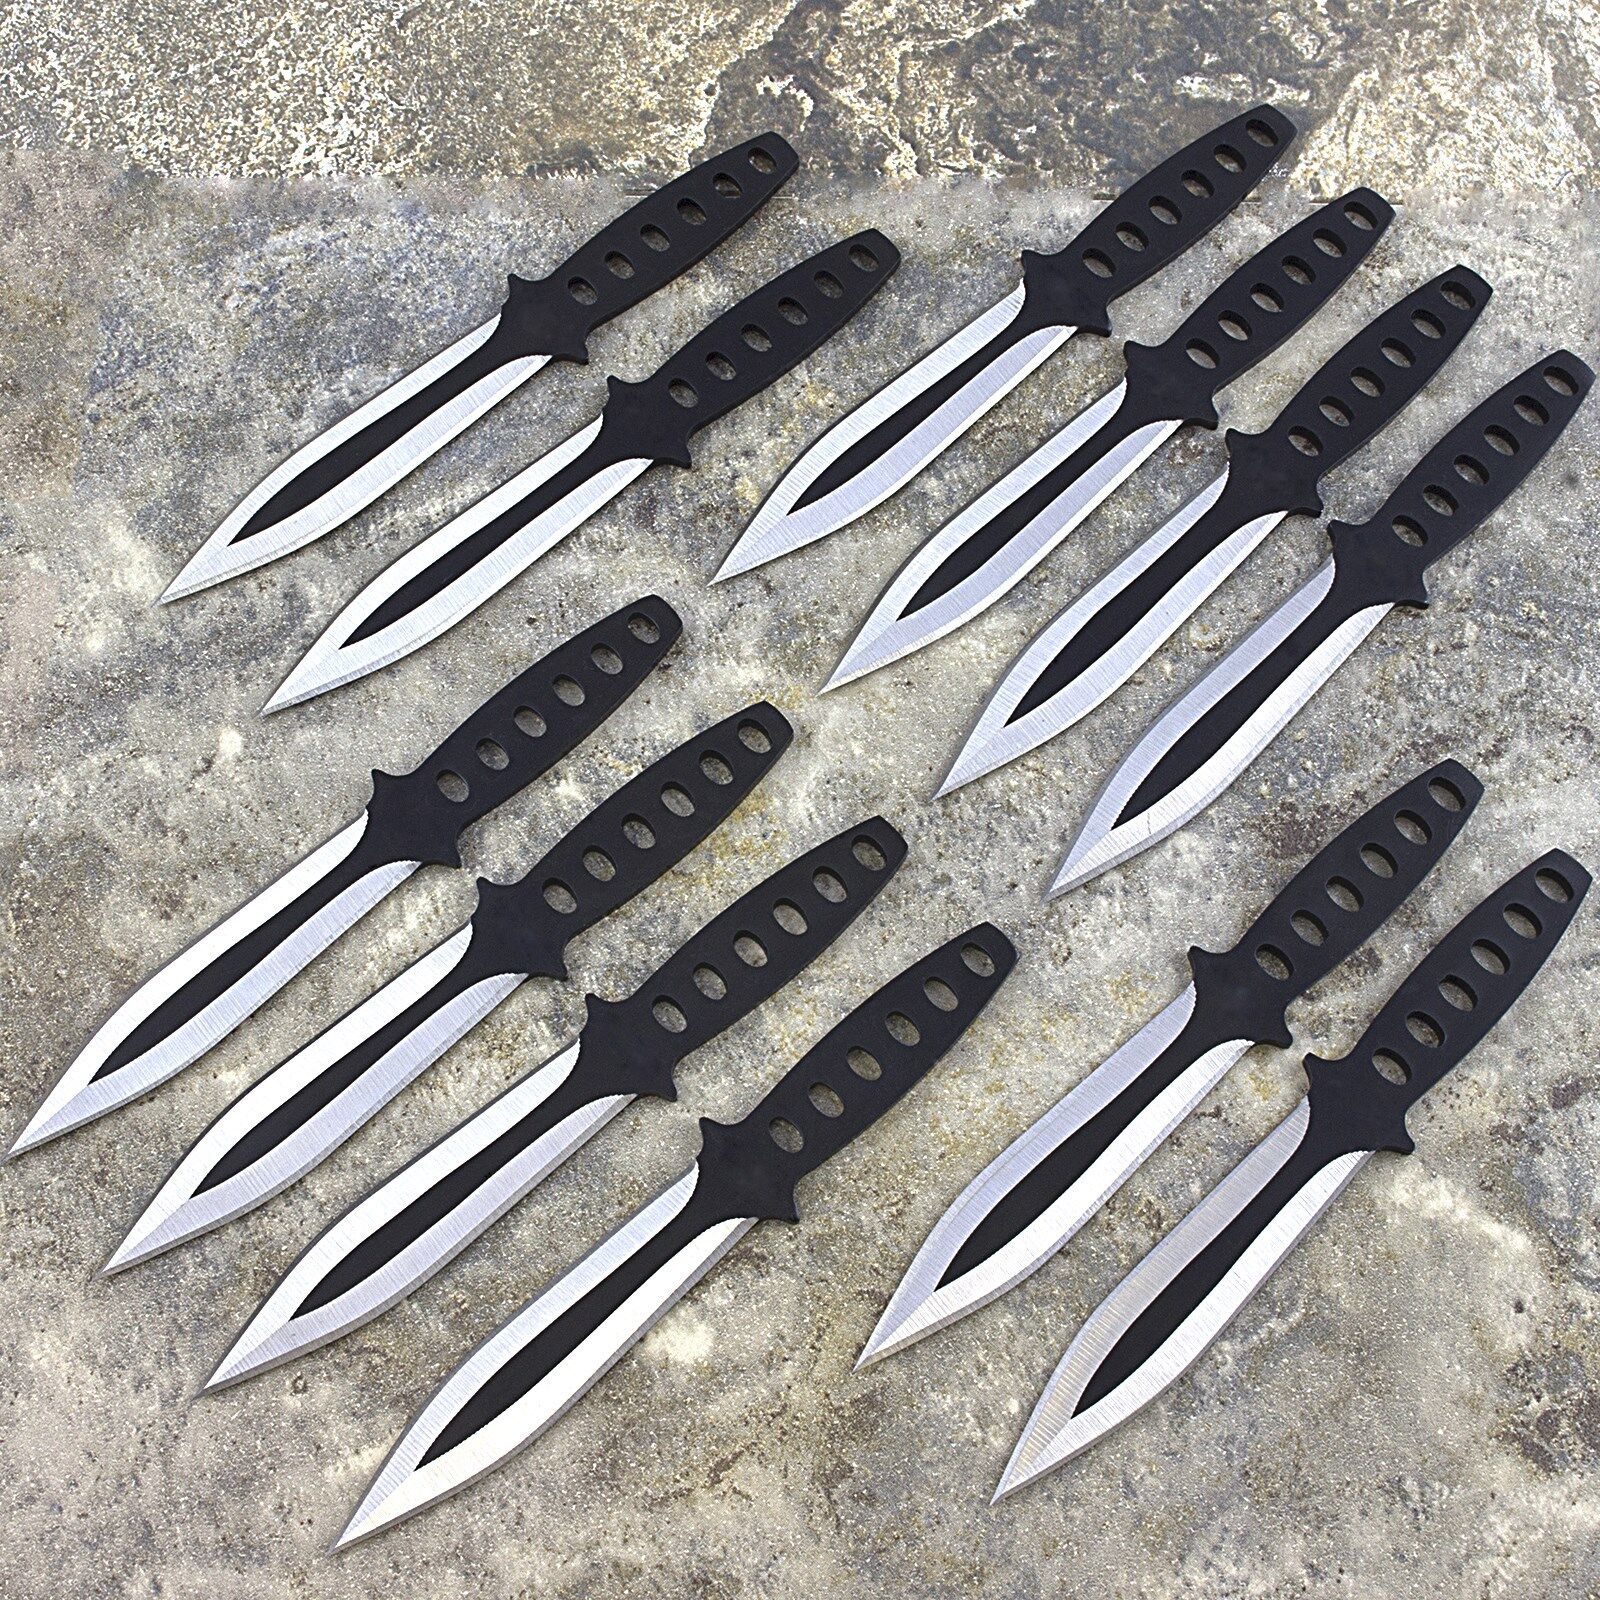 12 PC NINJA THROWING KNIVES SET w/ SHEATH Kunai Combat Tactical Hunting Knife